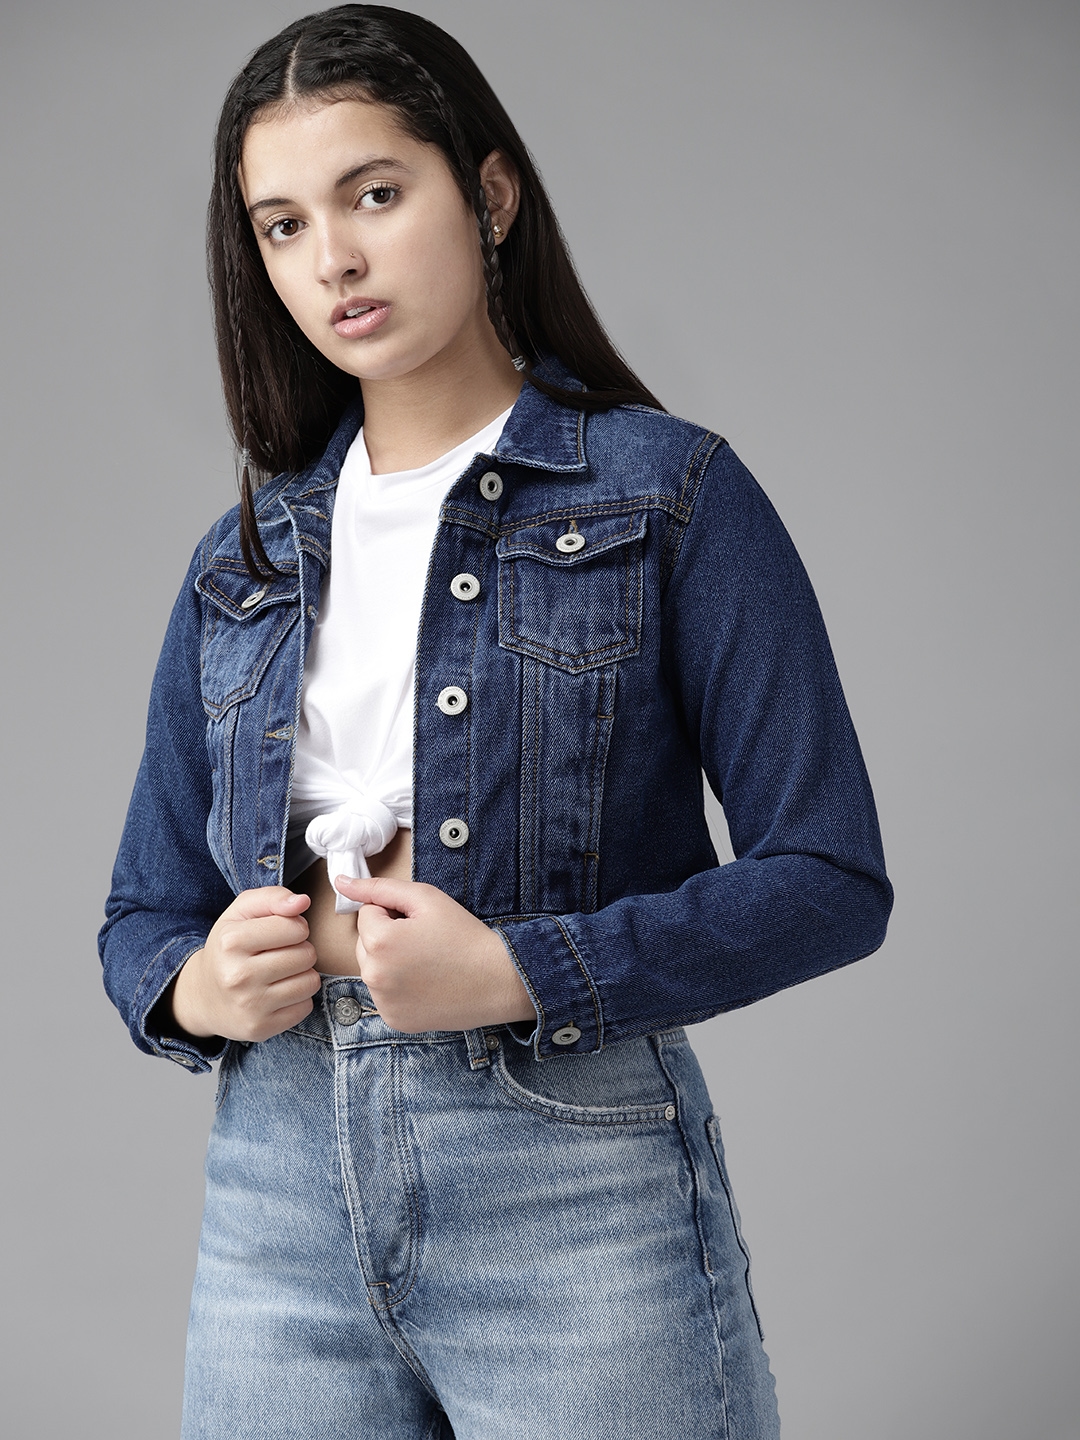 Update 182+ girls jacket jeans best